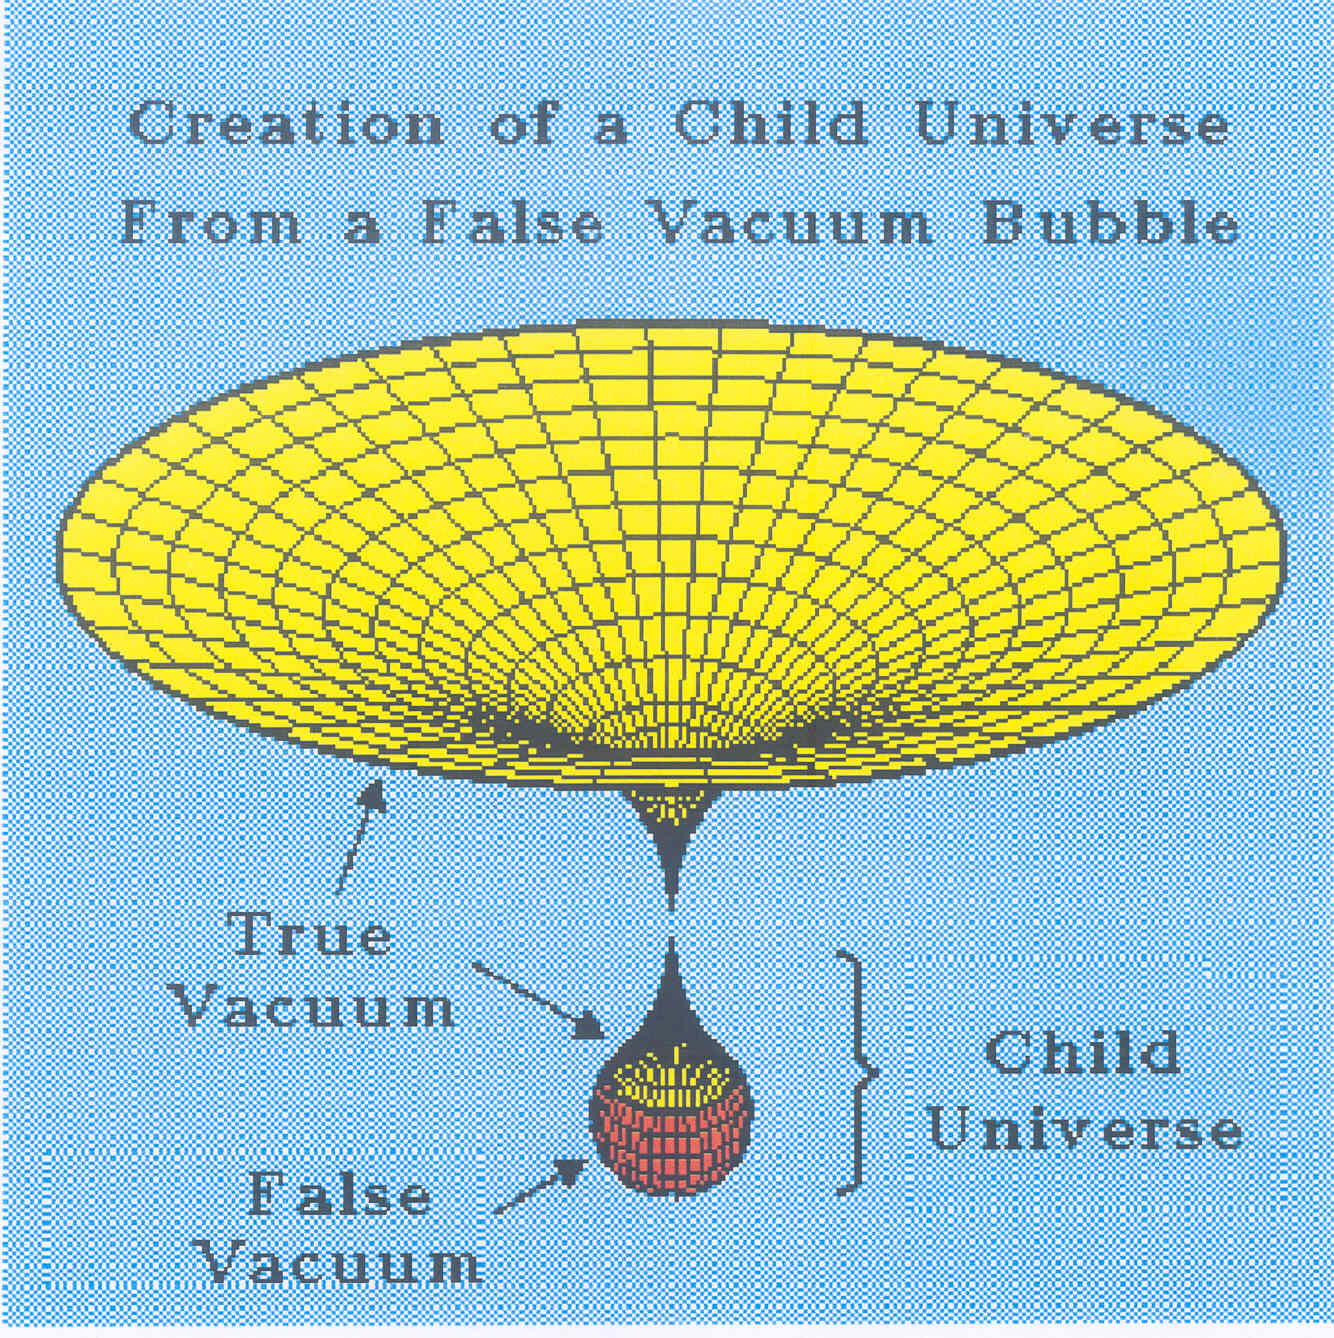 Vacuum Energy and Child Universes